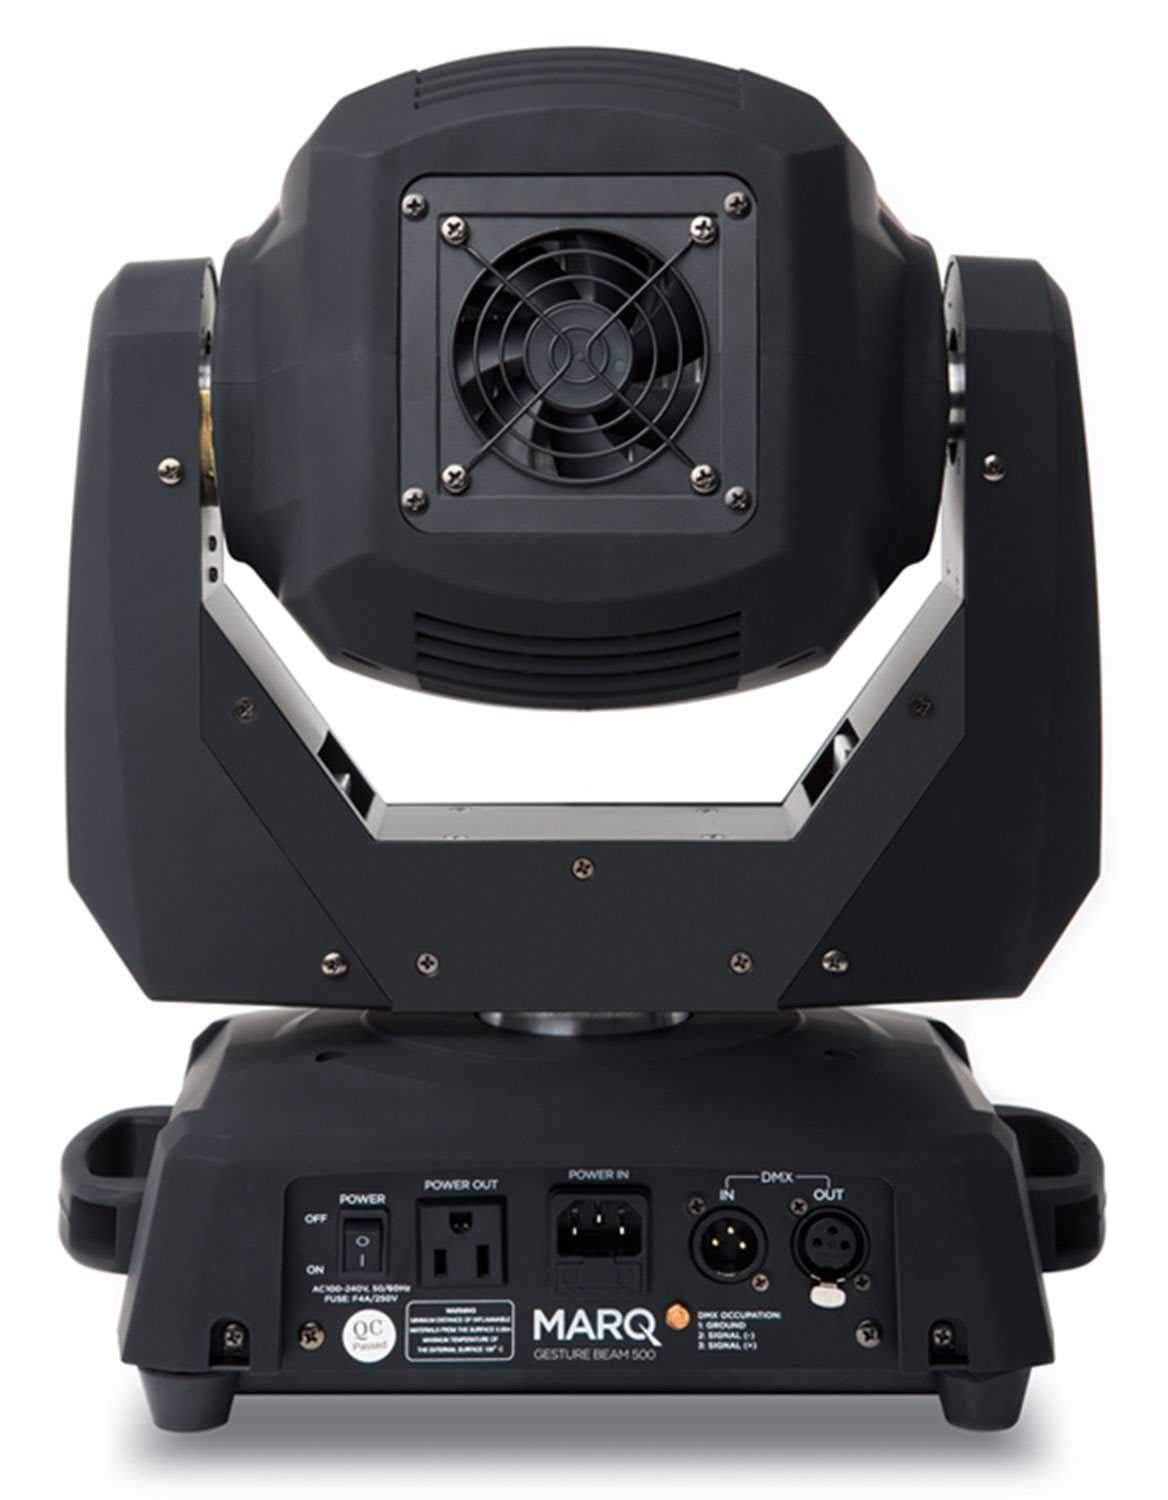 MARQ Gesture Beam 500 120-Watt LED Moving Head Light - ProSound and Stage Lighting